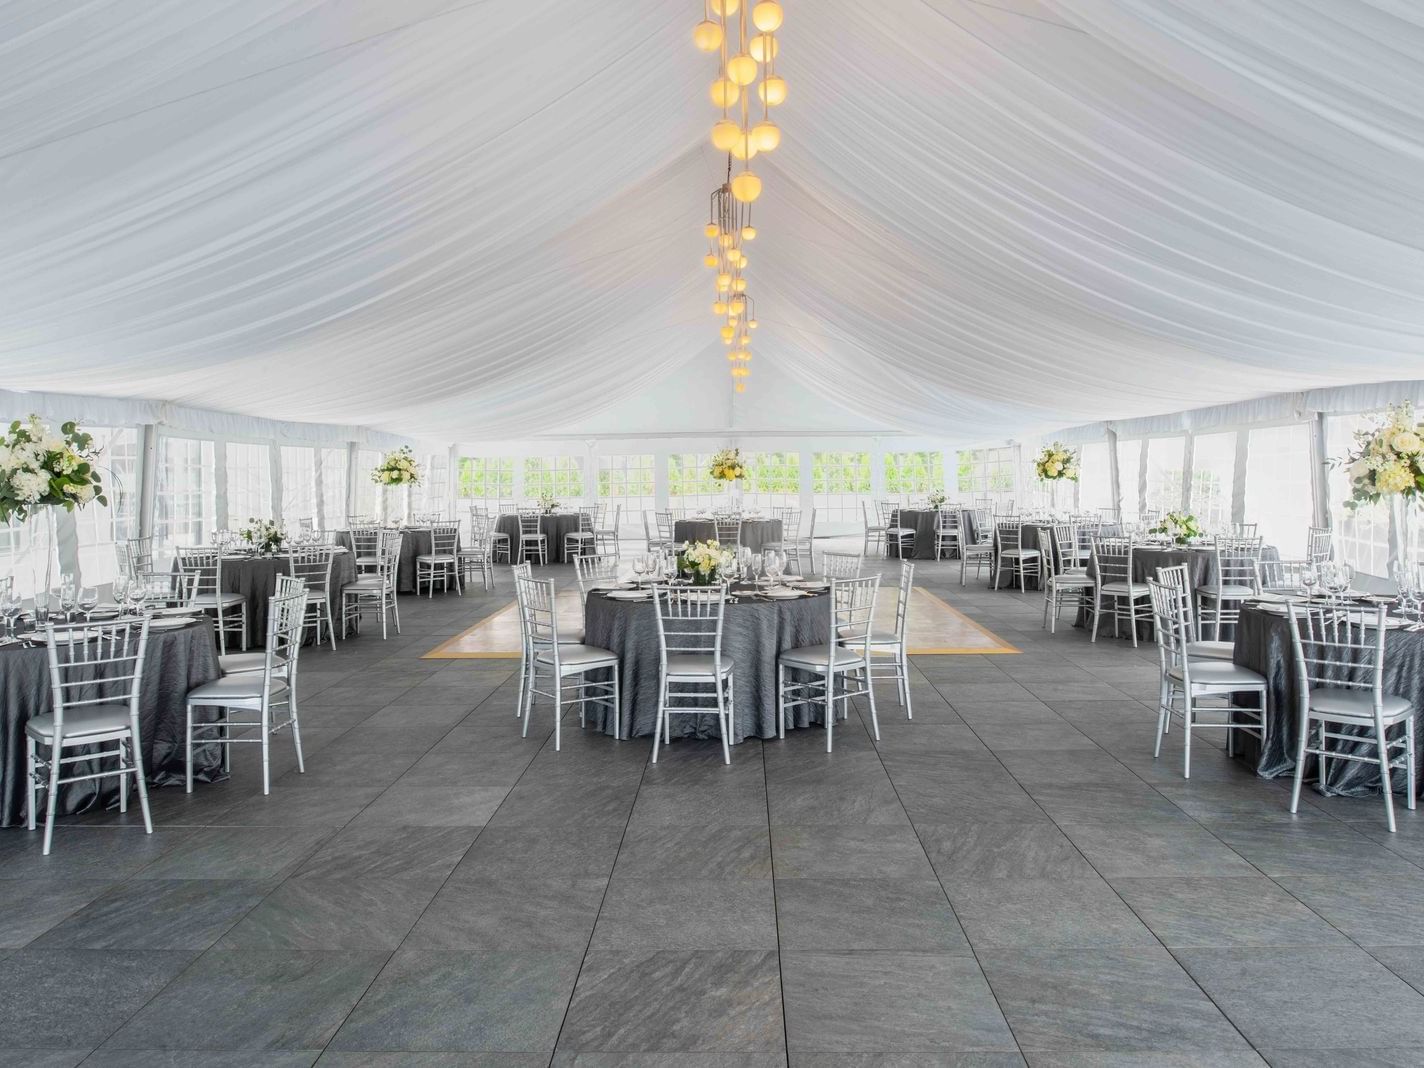 venue set up for wedding reception